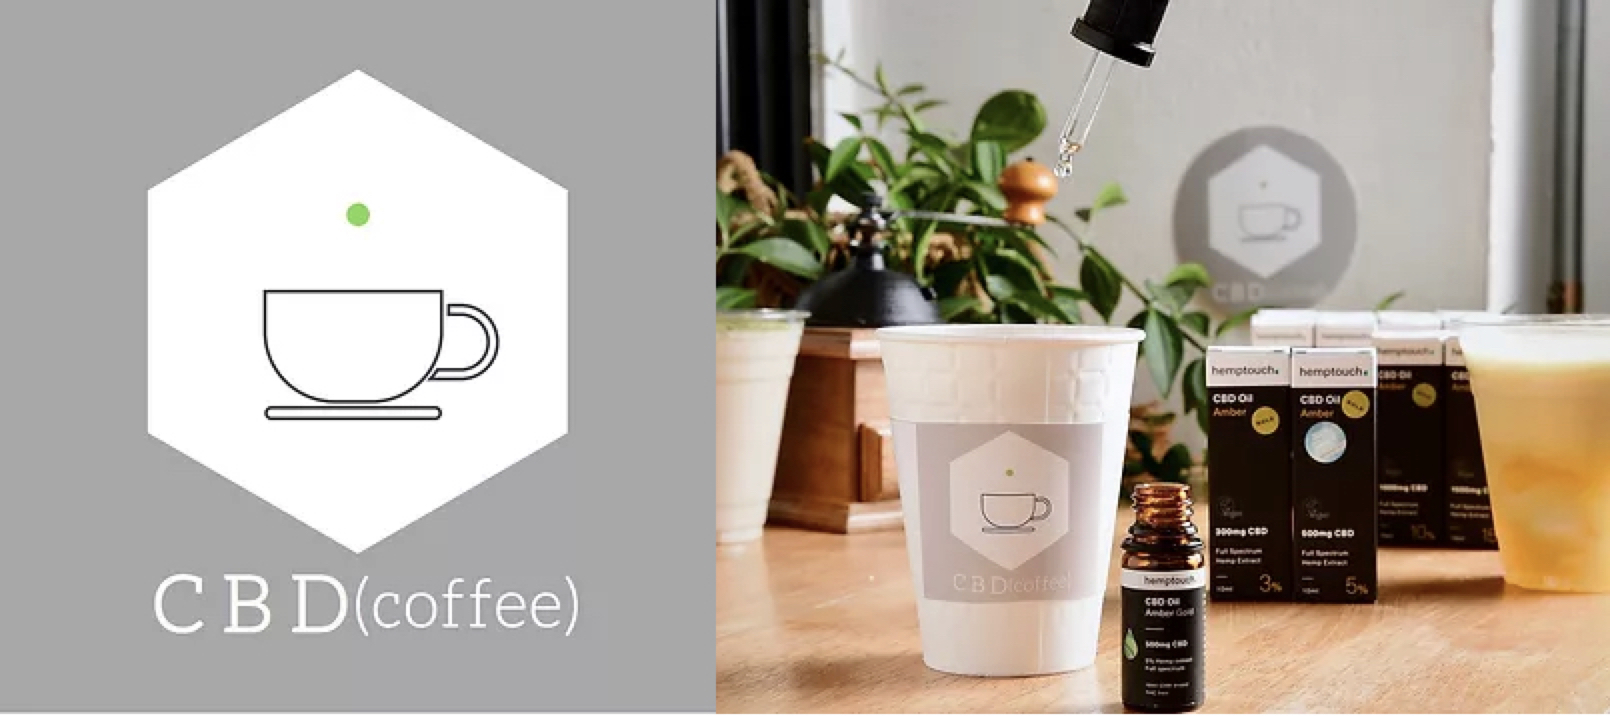 CBD Coffeeの店舗ロゴと雰囲気を公式サイトから拝借しました。